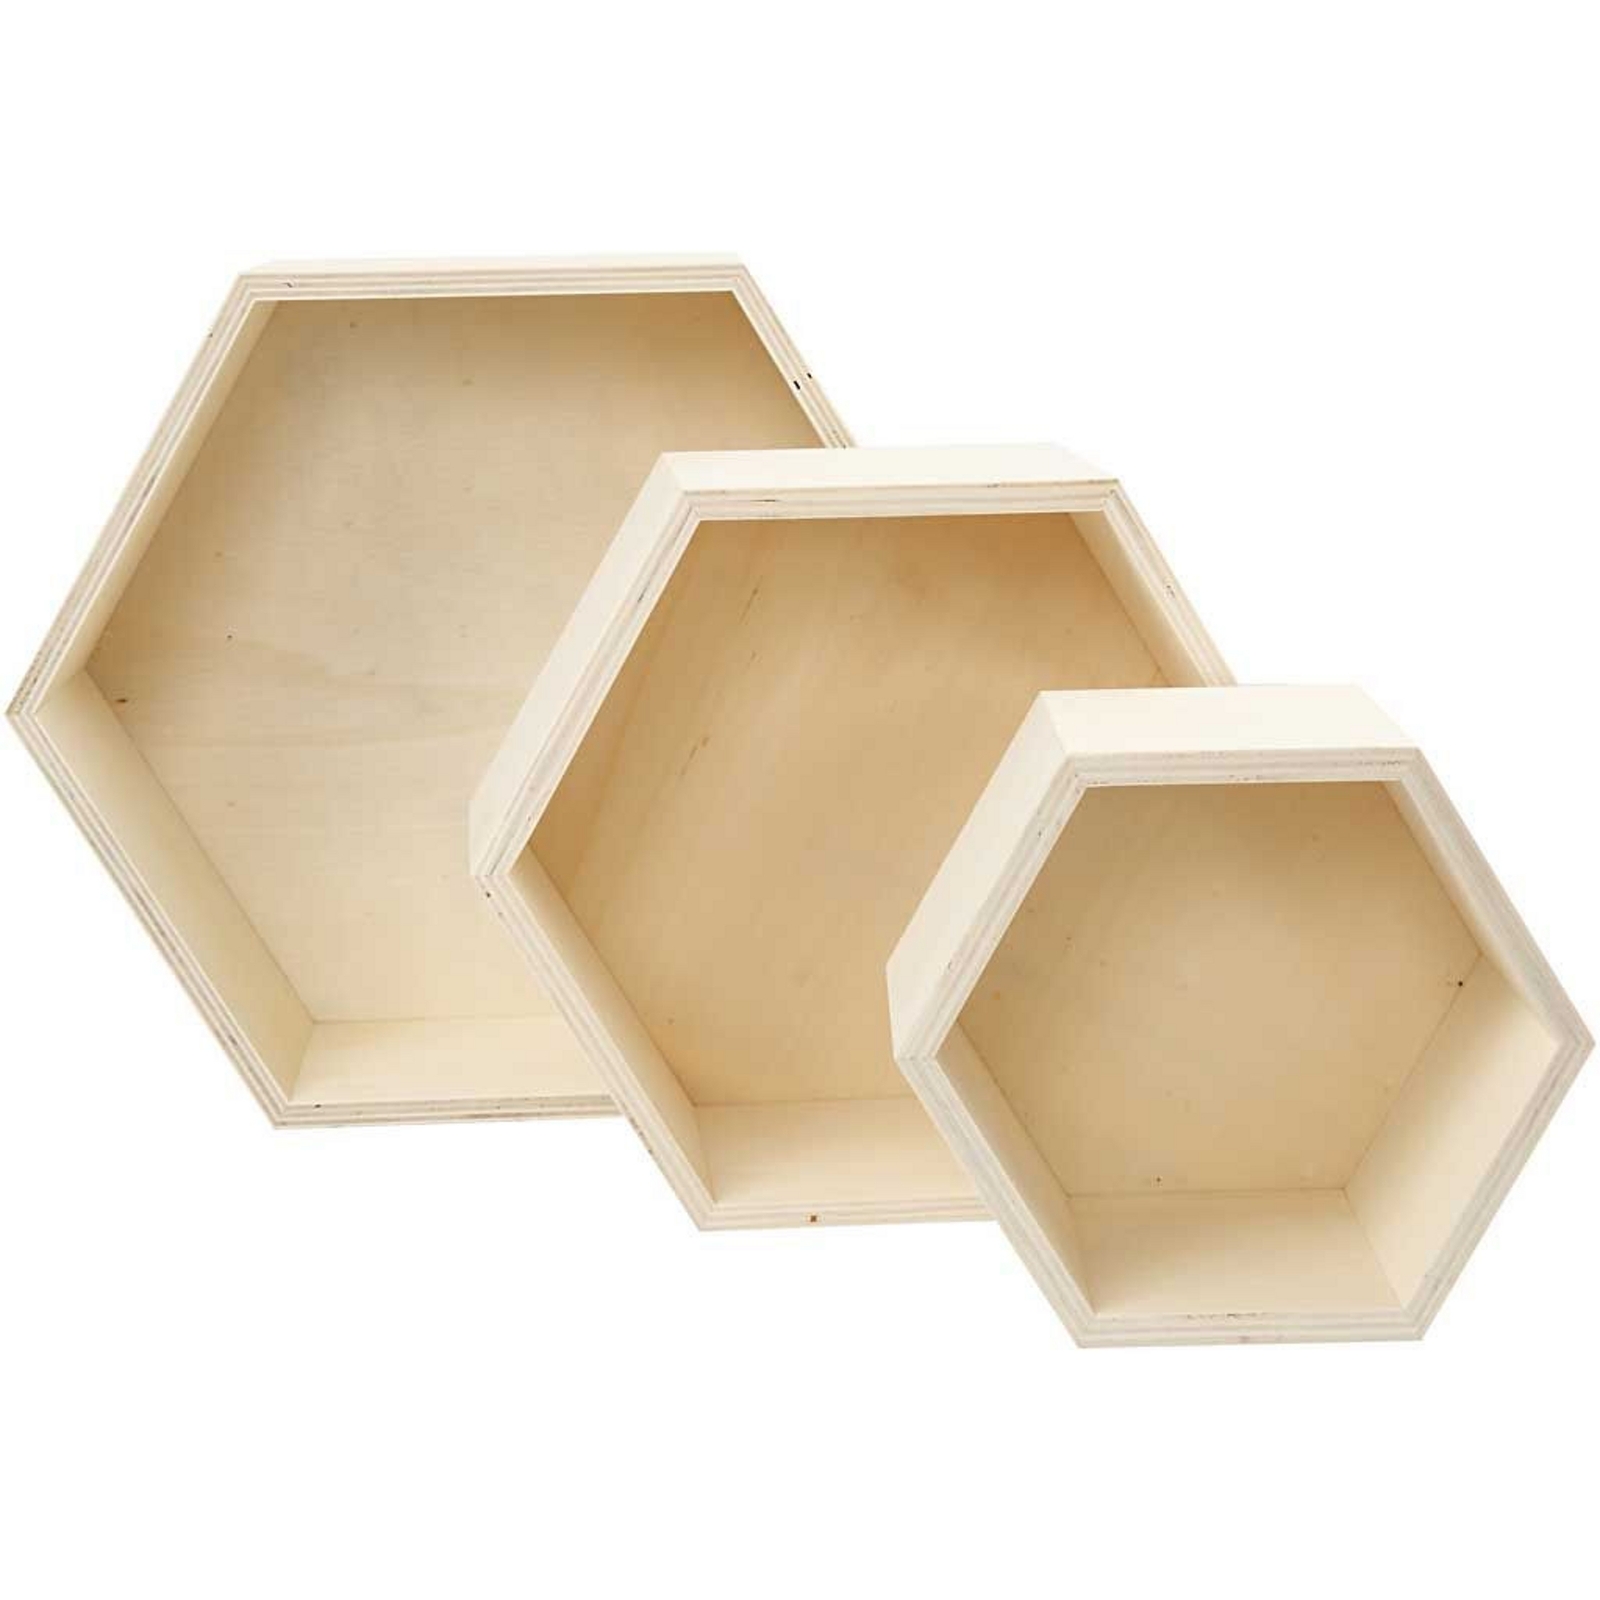 Hexagonal Storage Boxes - Pack 3